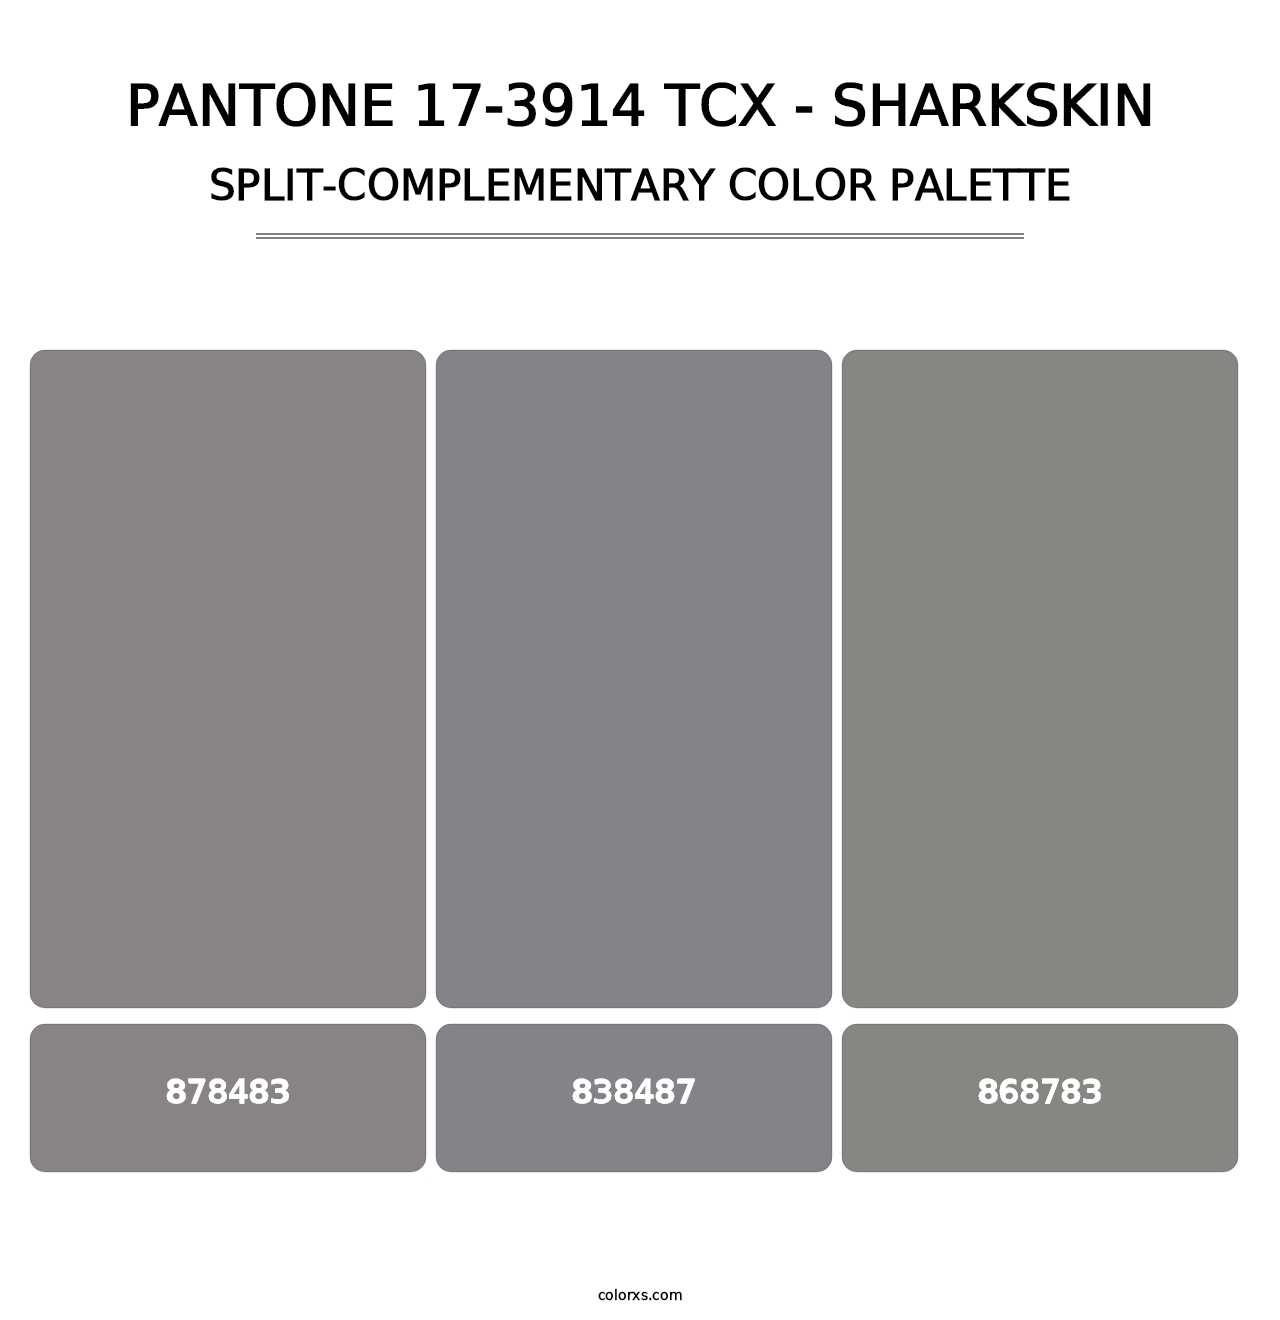 PANTONE 17-3914 TCX - Sharkskin - Split-Complementary Color Palette